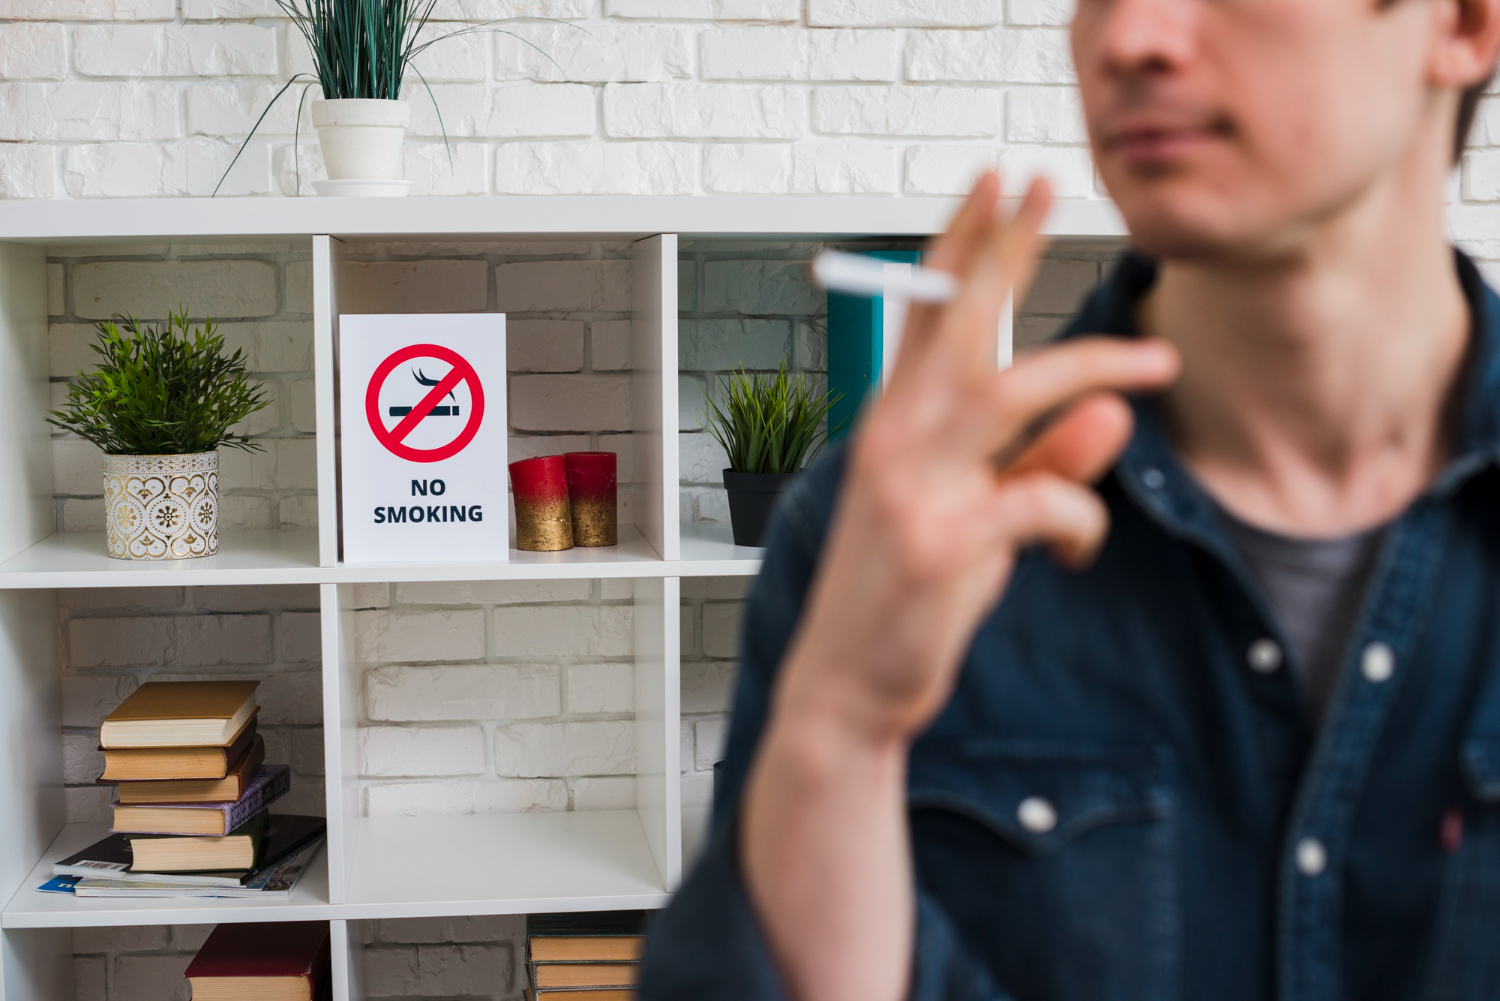 Breaking The Vicious Cycle Of Smoking Through Stop Smoking Seminars Nearby